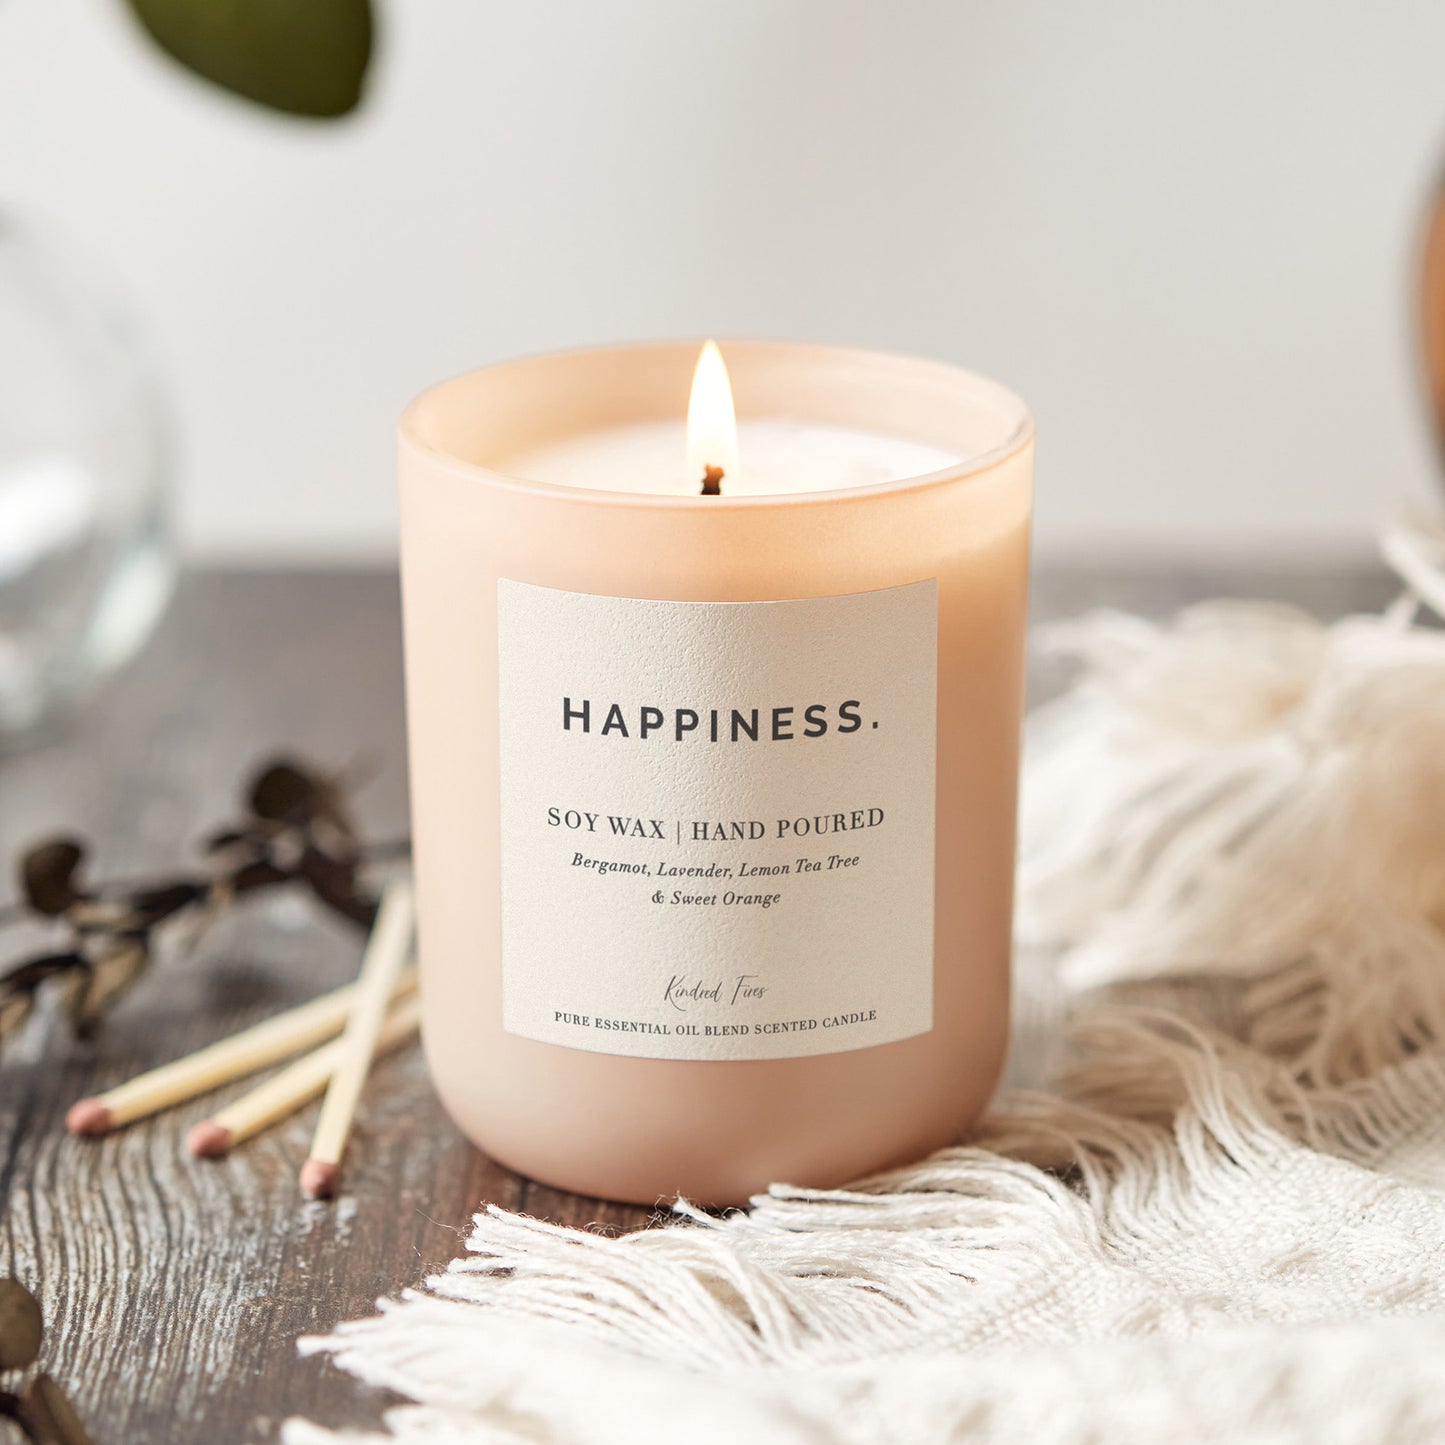 Nude Aromatherapy Candles - Sleep, De-stress, Happiness, Focus, Energy